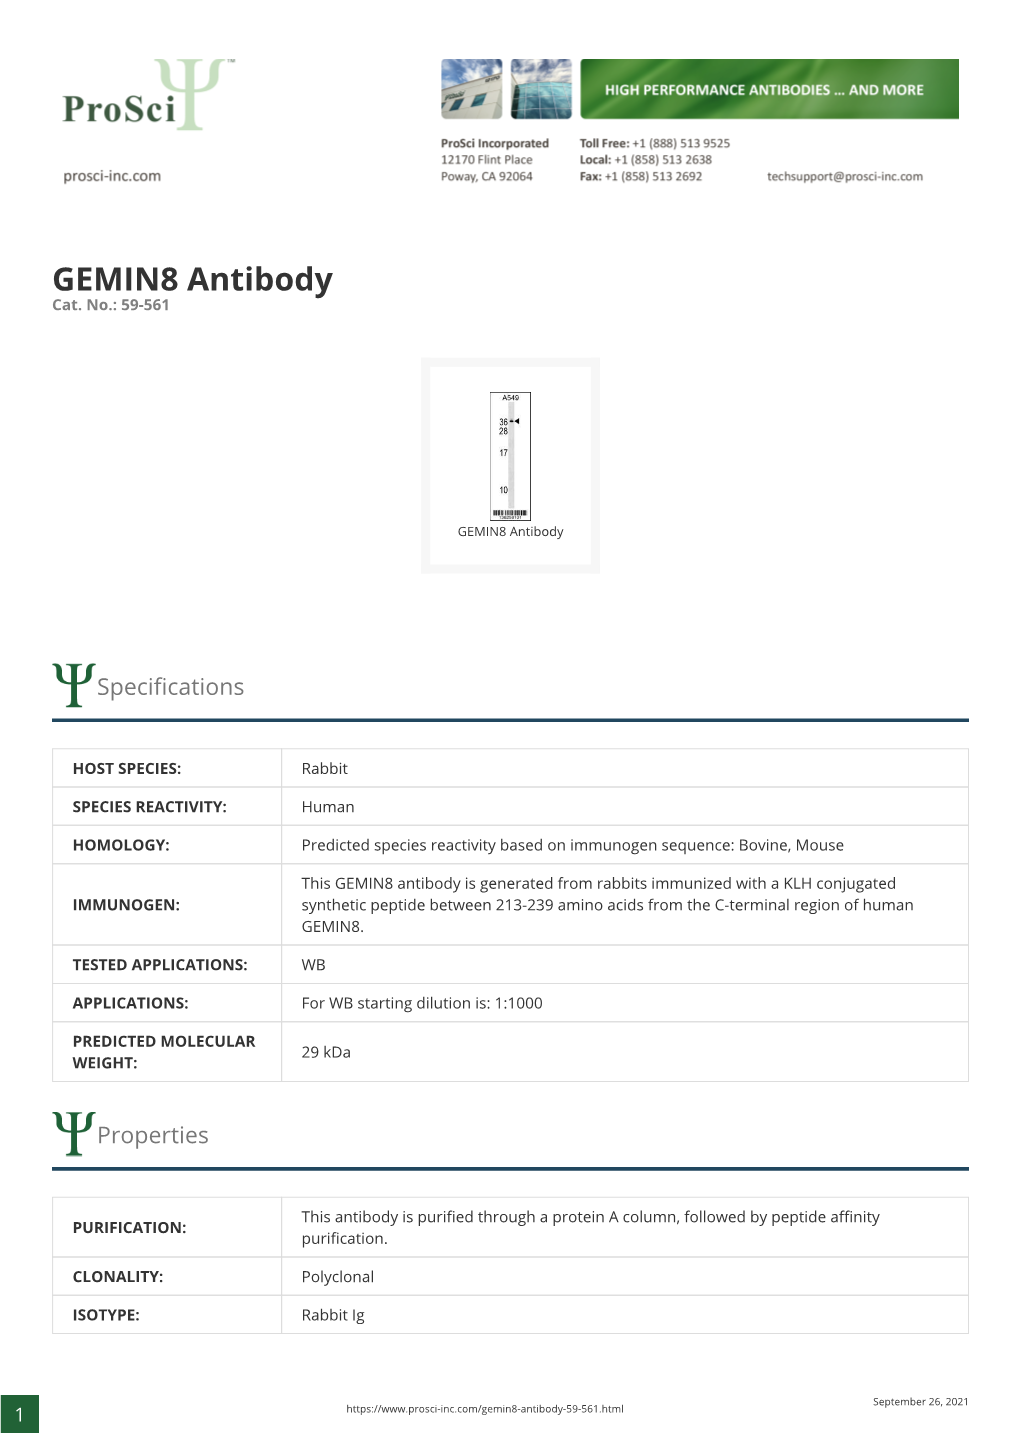 GEMIN8 Antibody Cat